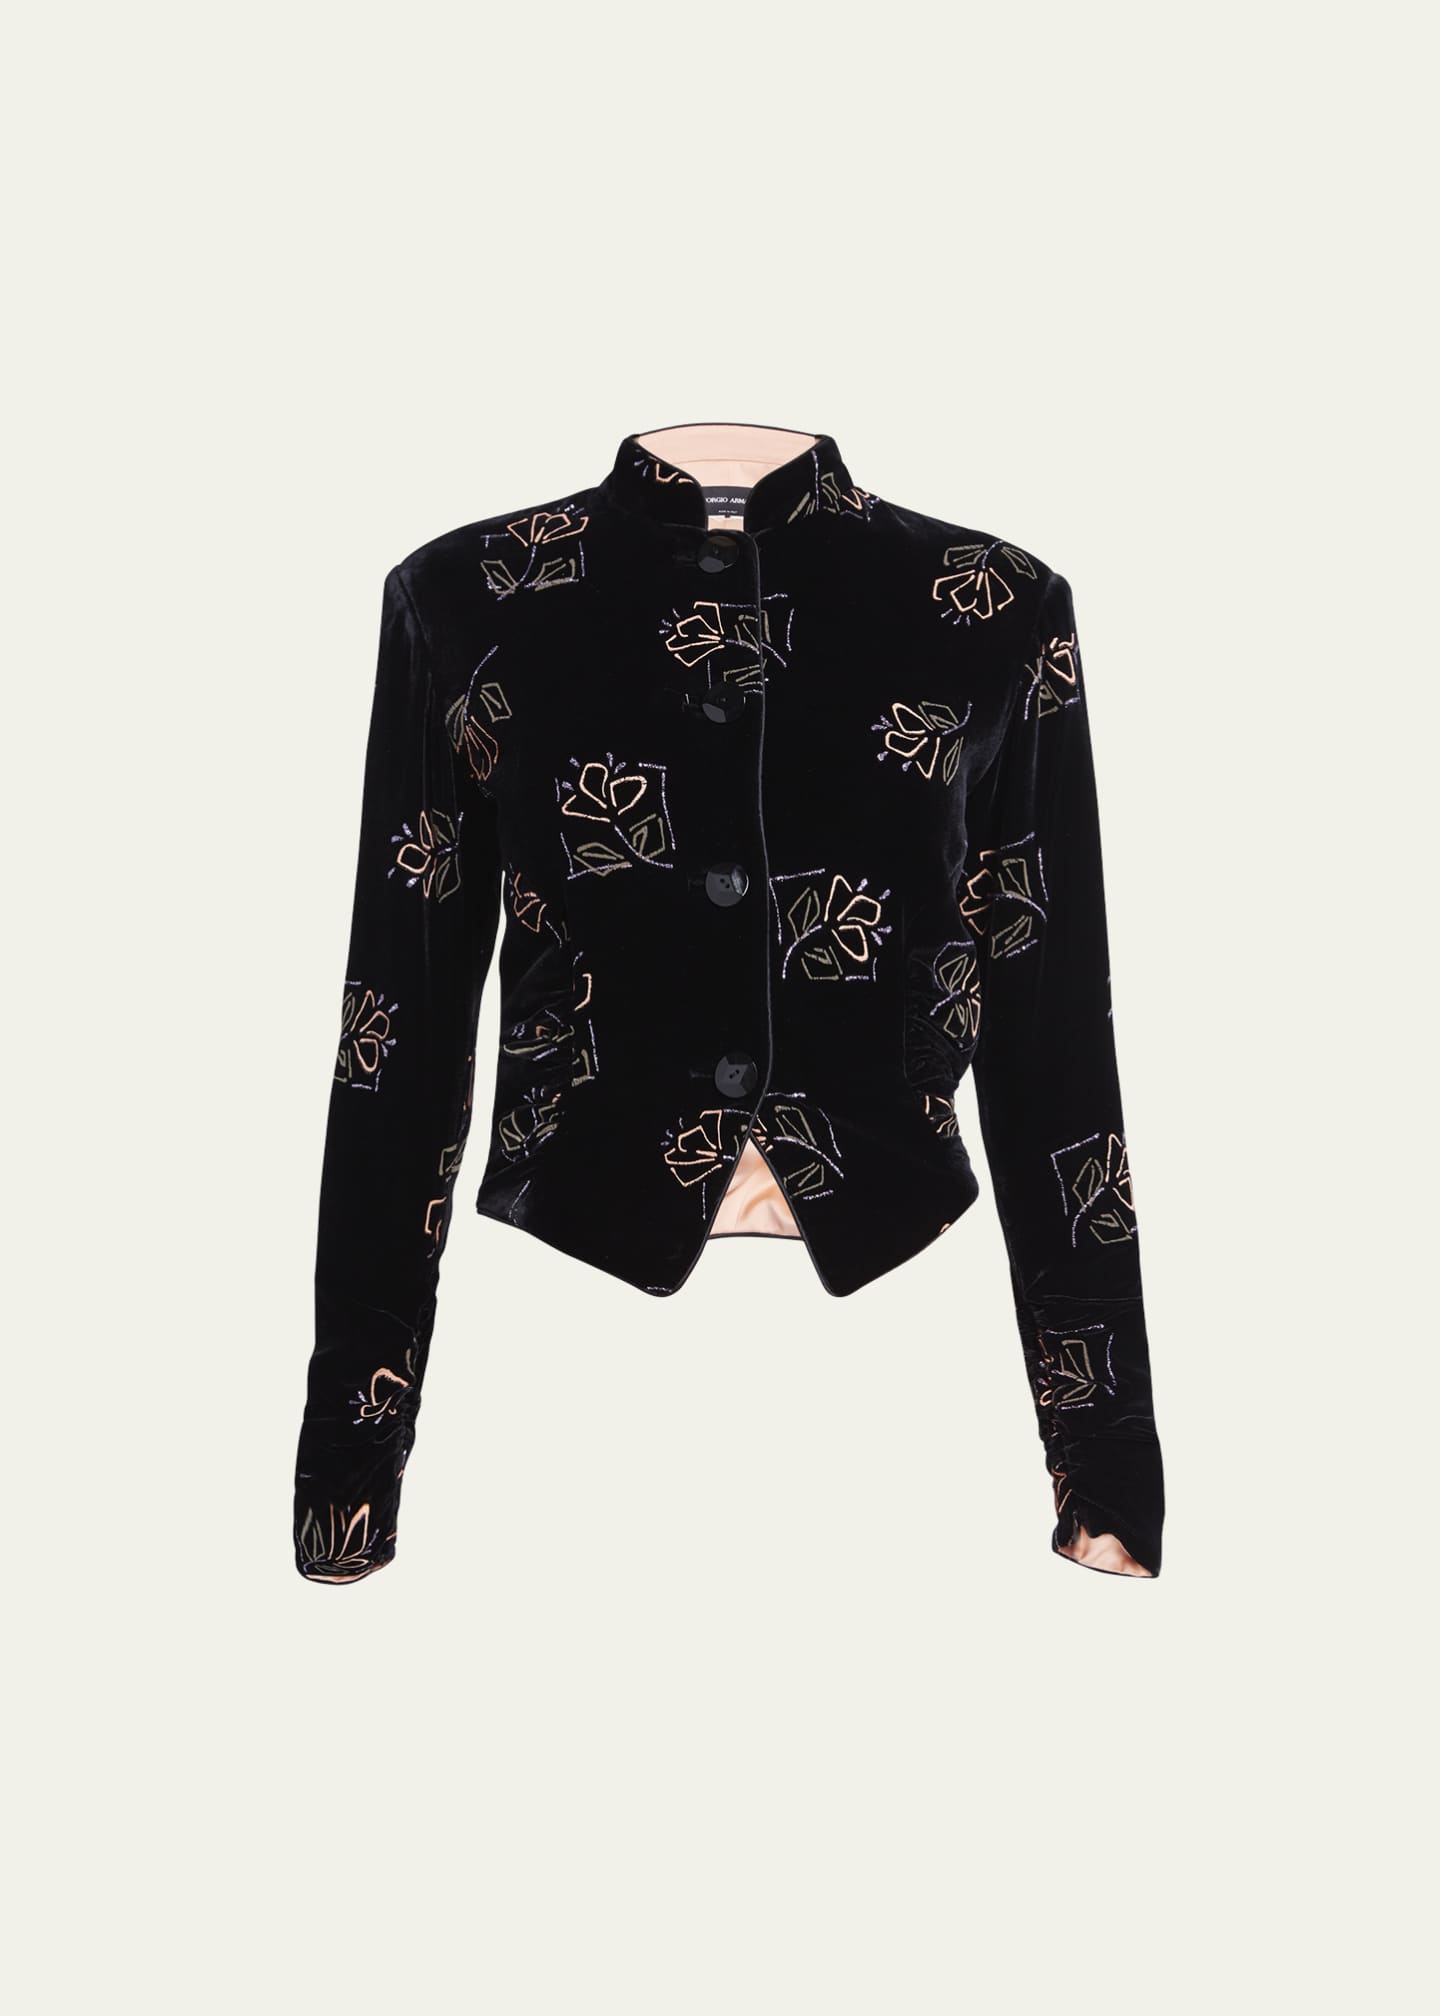 Giorgio Armani Floral Embroidered Velvet Single-Breasted Jacket